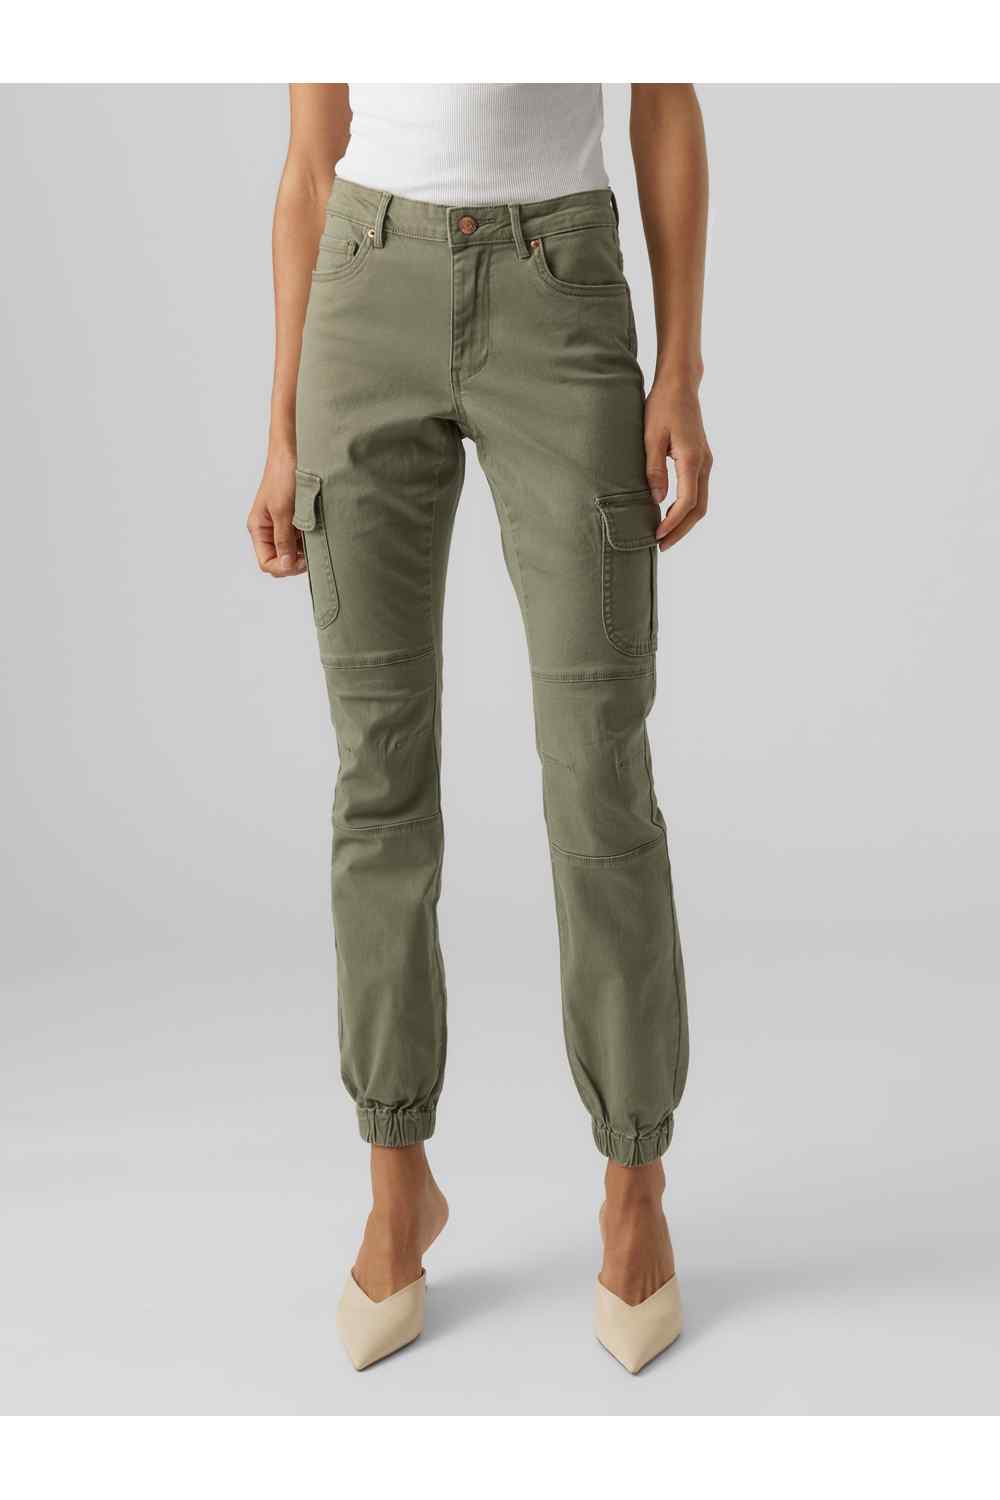 Vero Moda Ivy Cargo Pant - Green 1 Shaws Department Stores